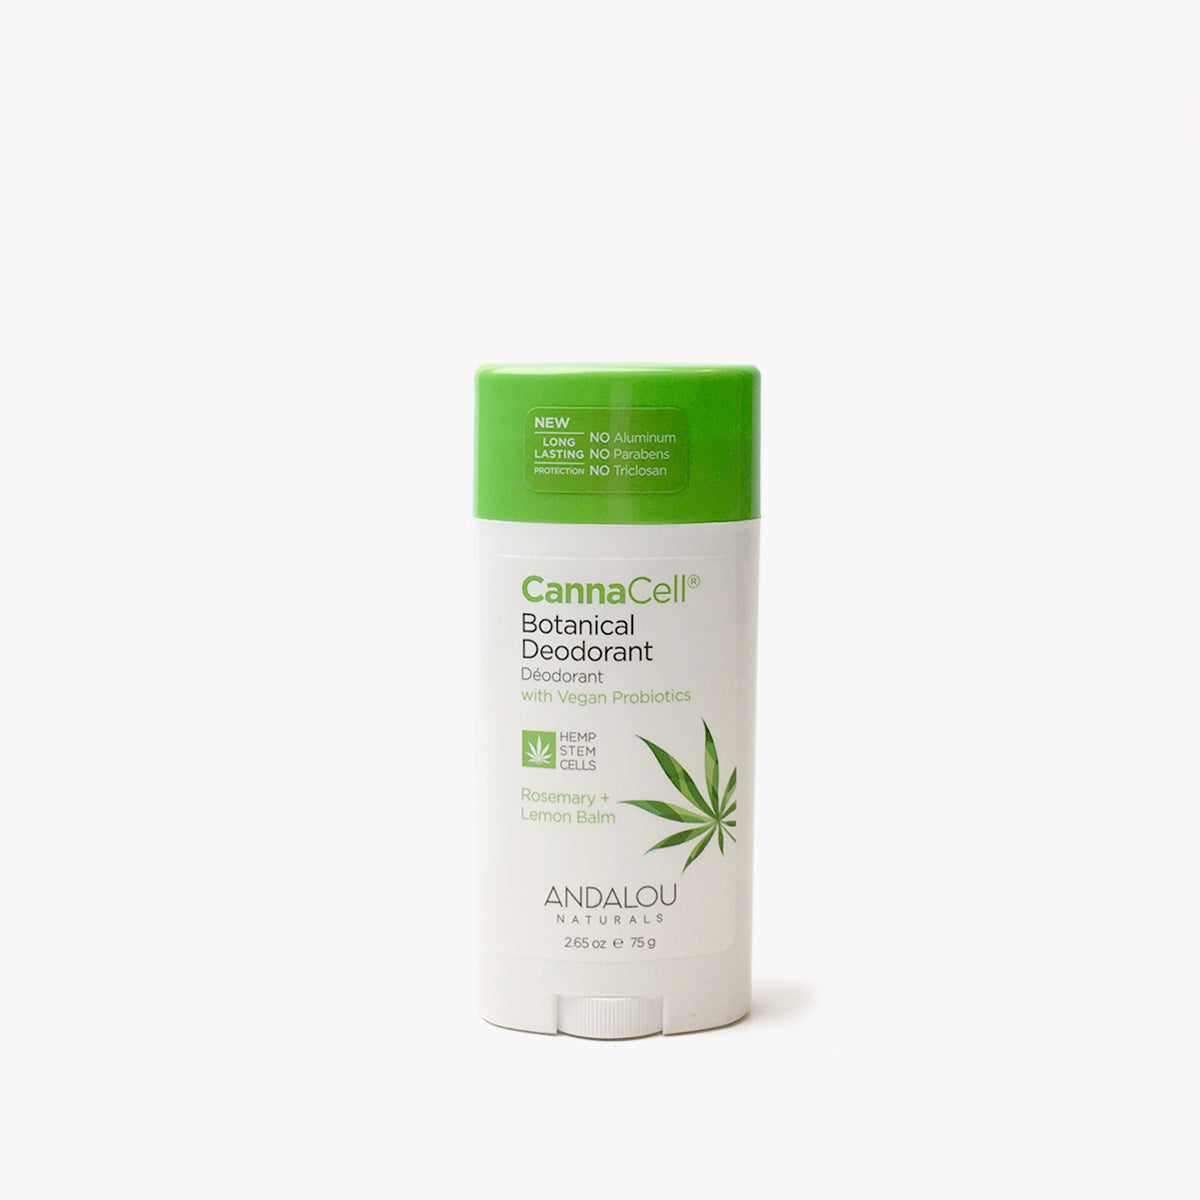 CannaCell Botanical Deodorant - Rosemary + Lemon Balm - Andalou Naturals US